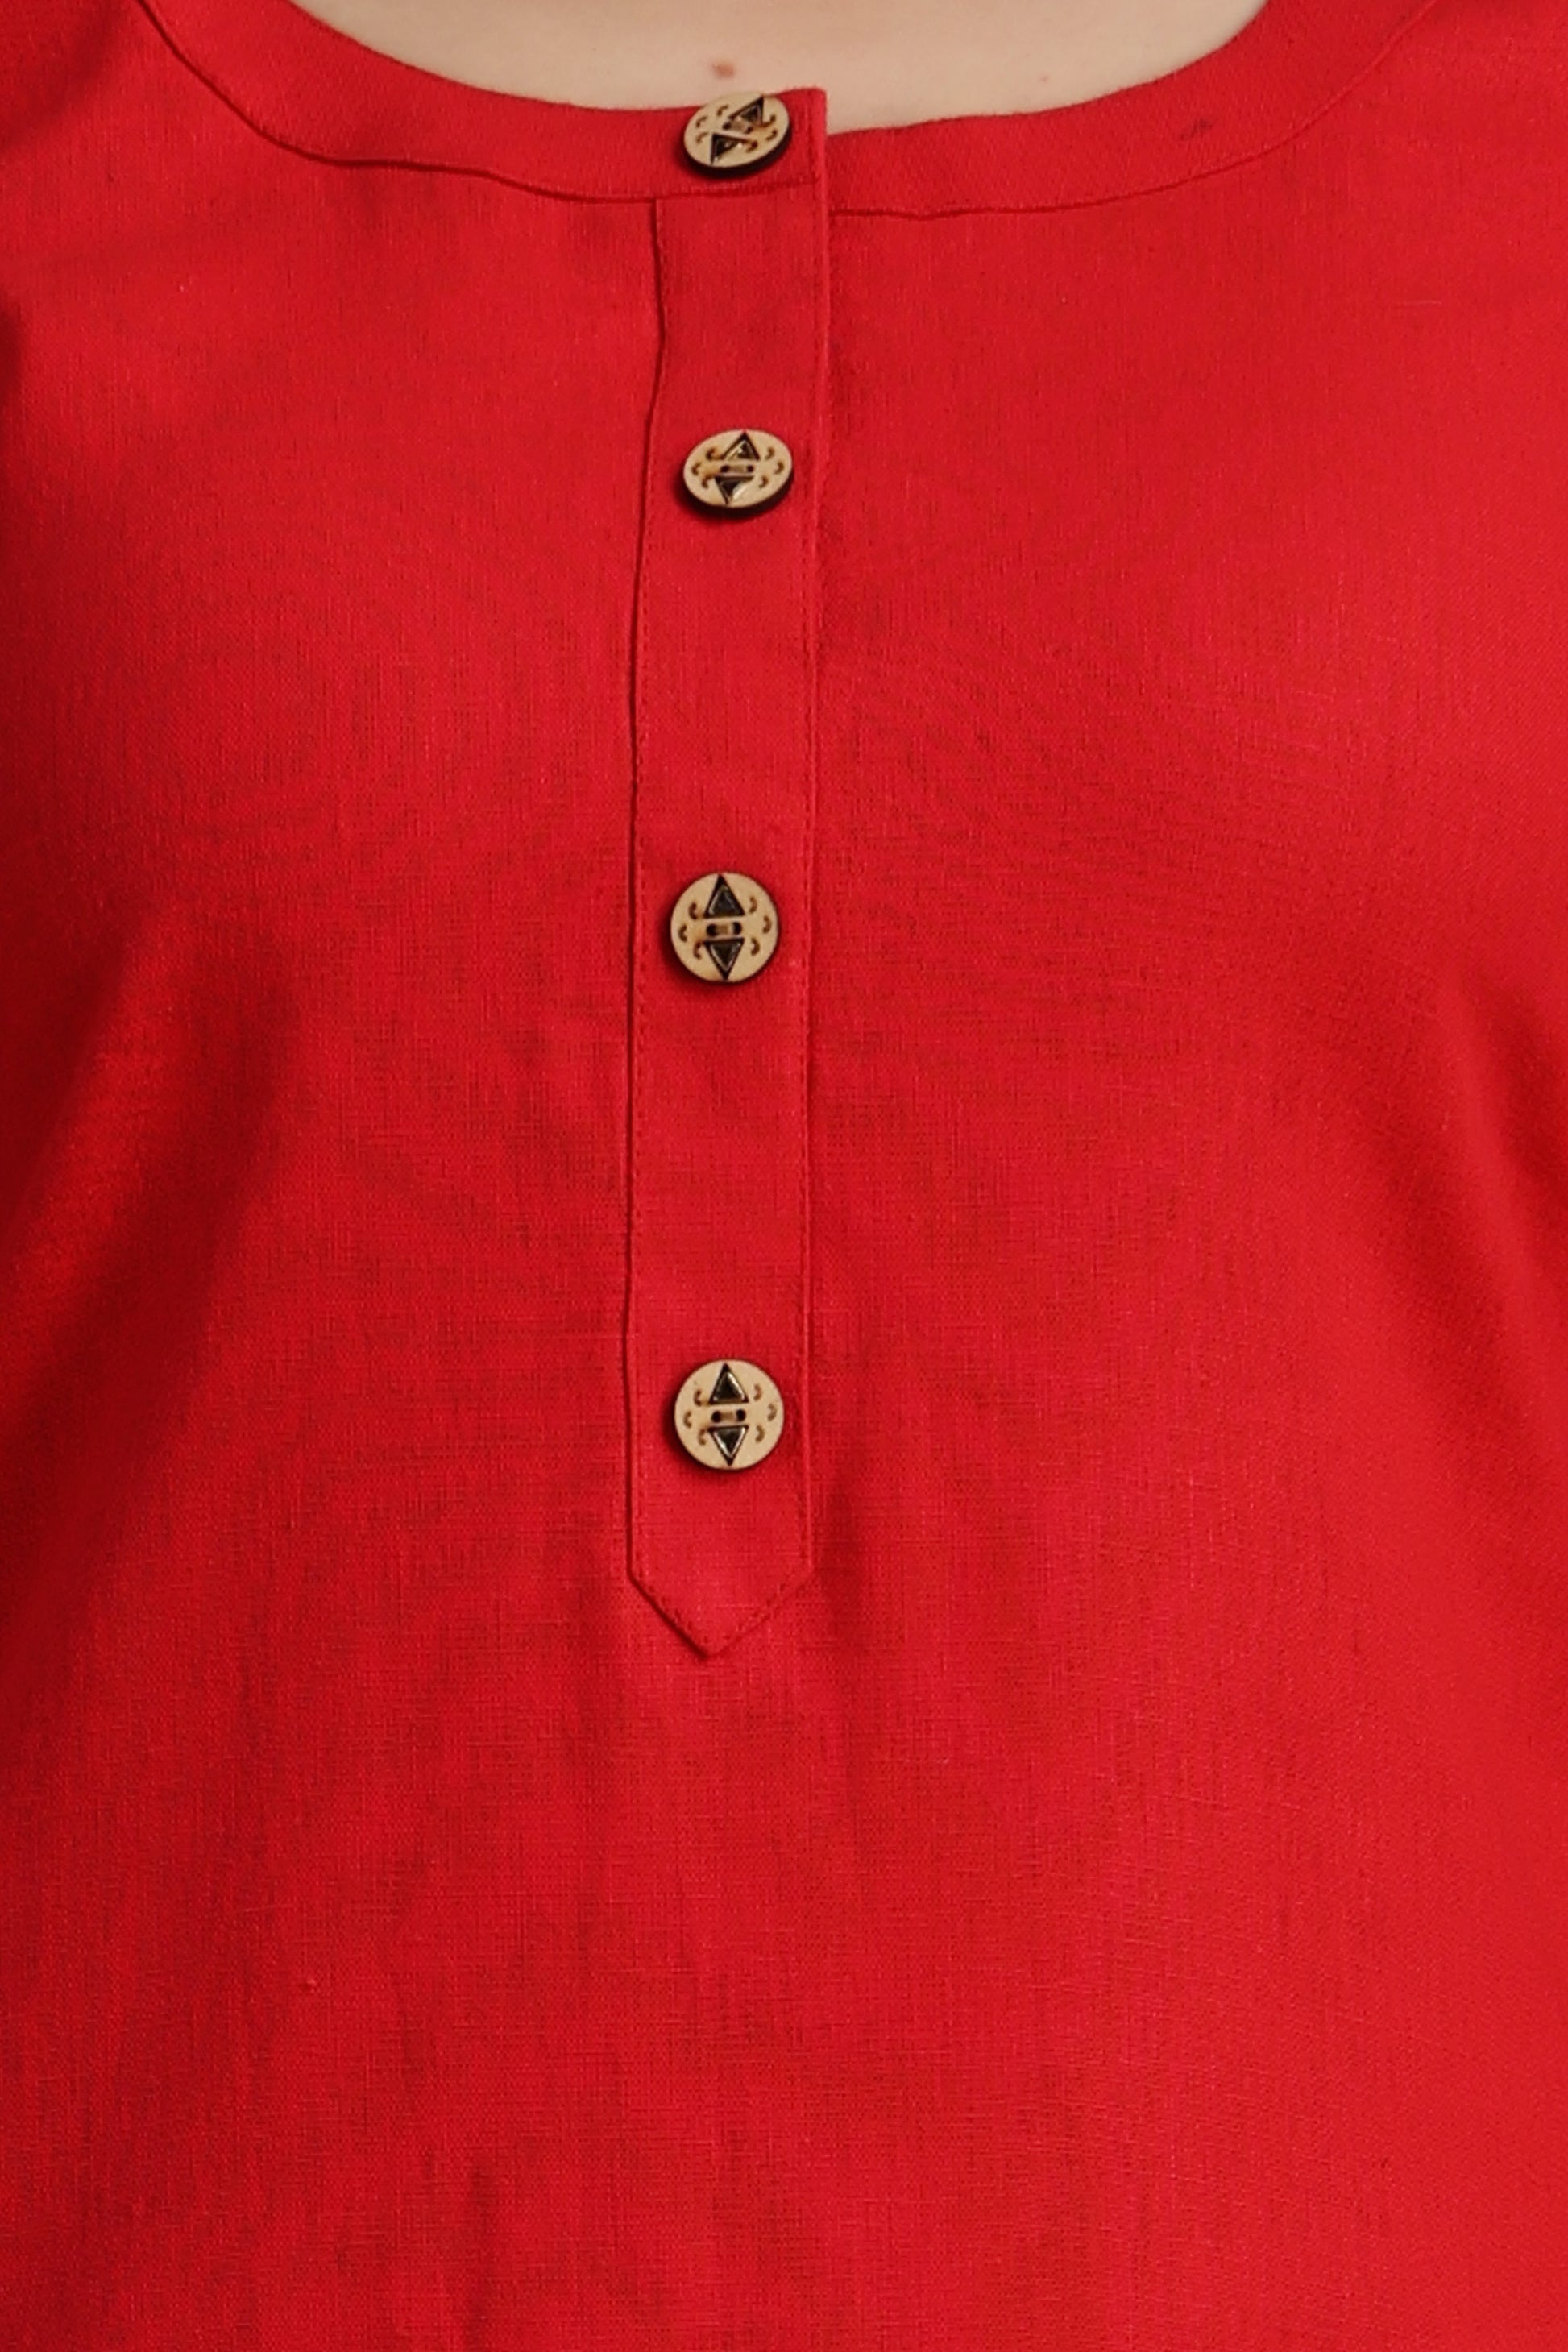 Women's Plus Size Red cotton kurti pant set | Apella